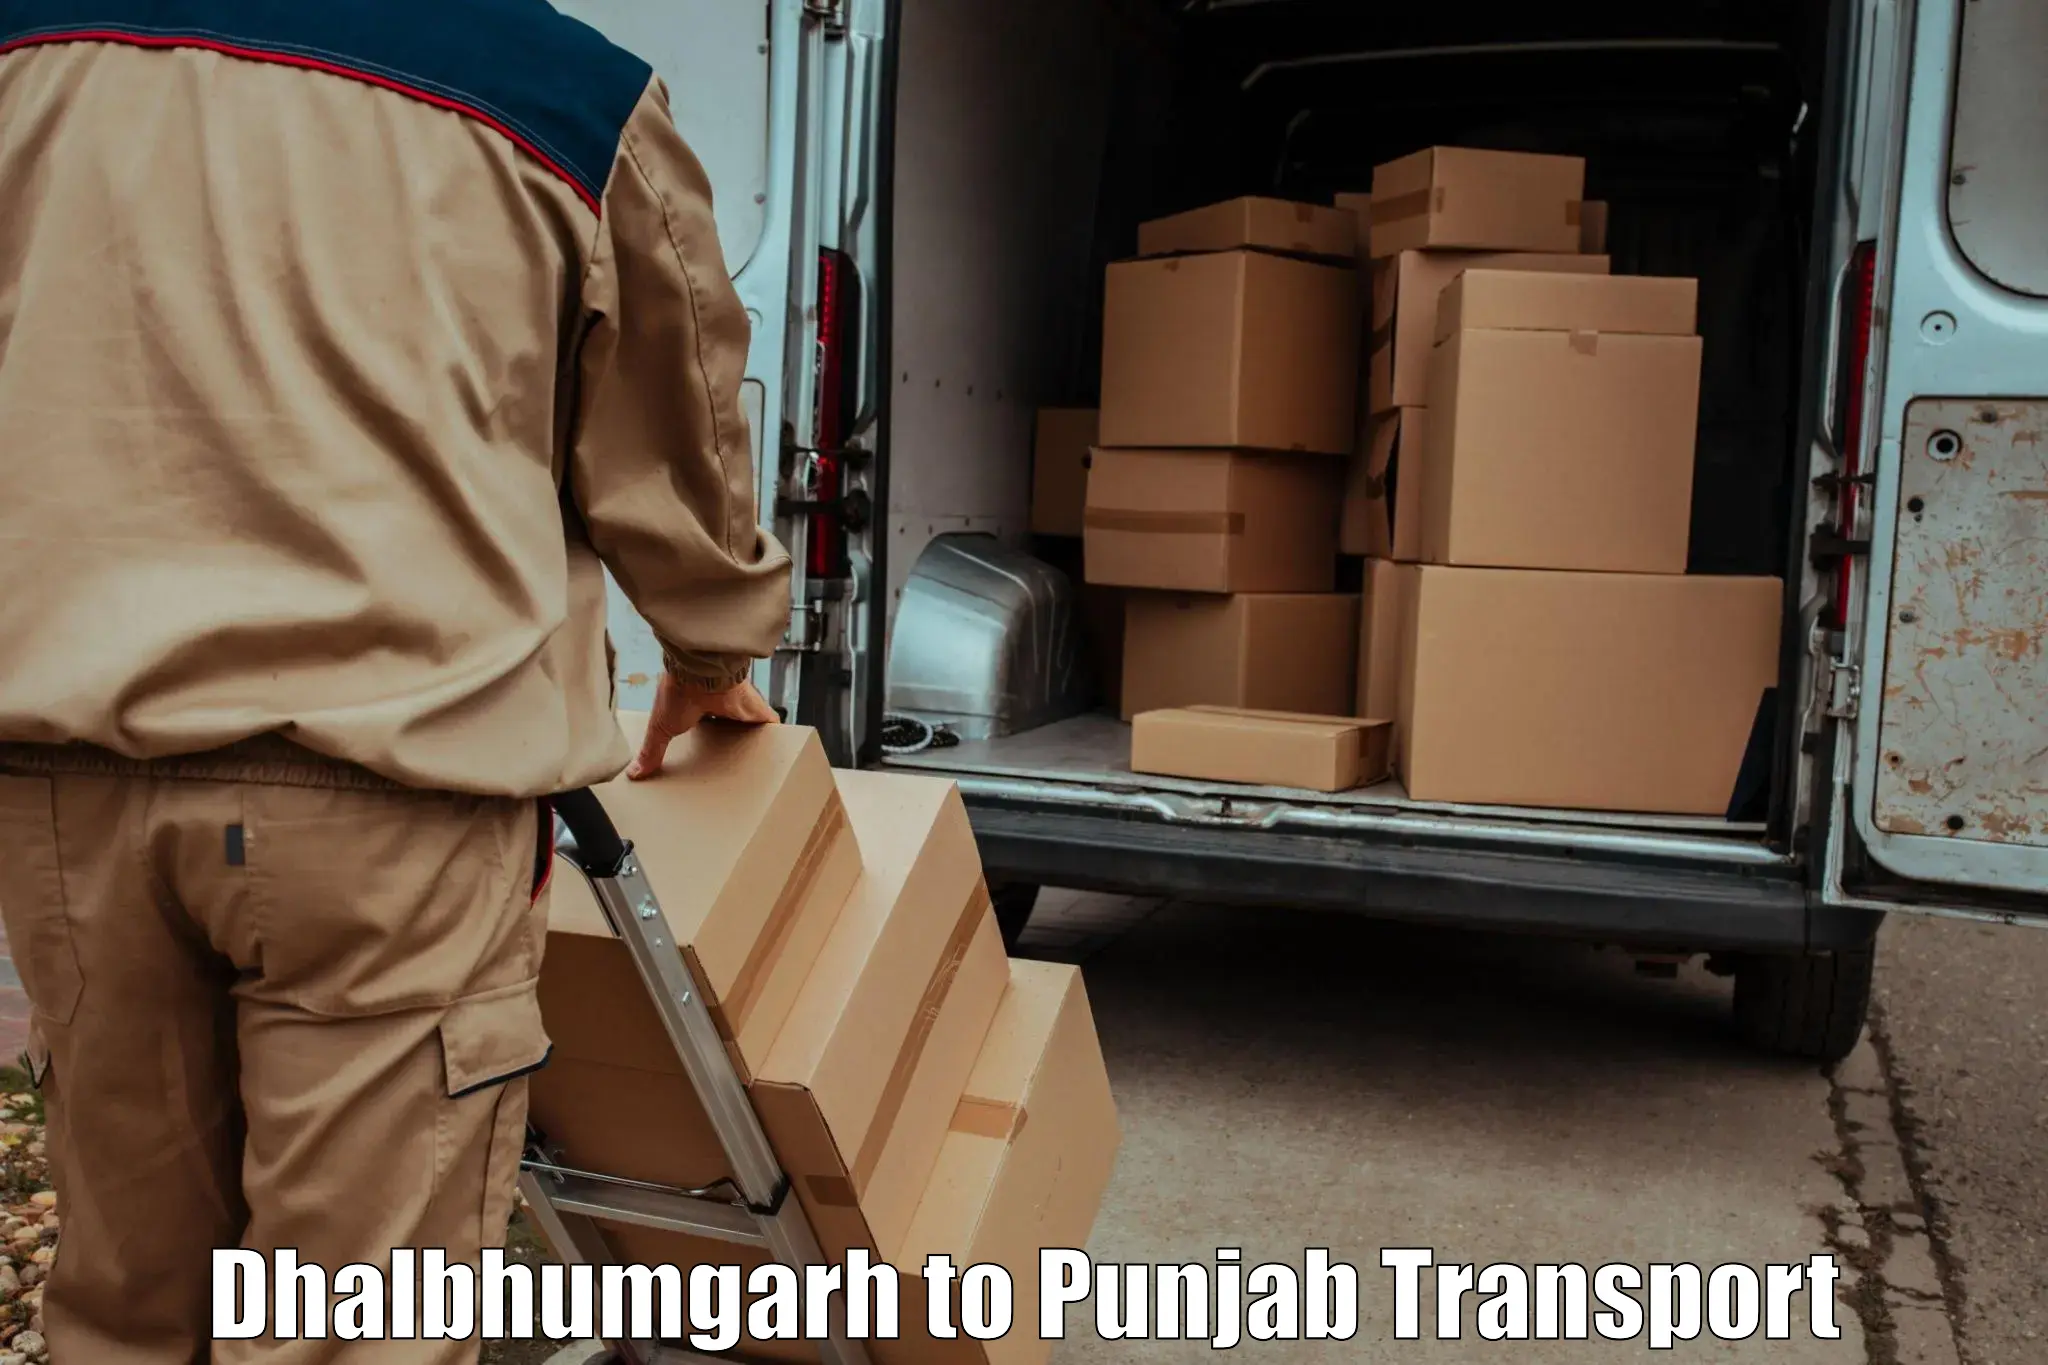 Daily parcel service transport Dhalbhumgarh to Malerkotla